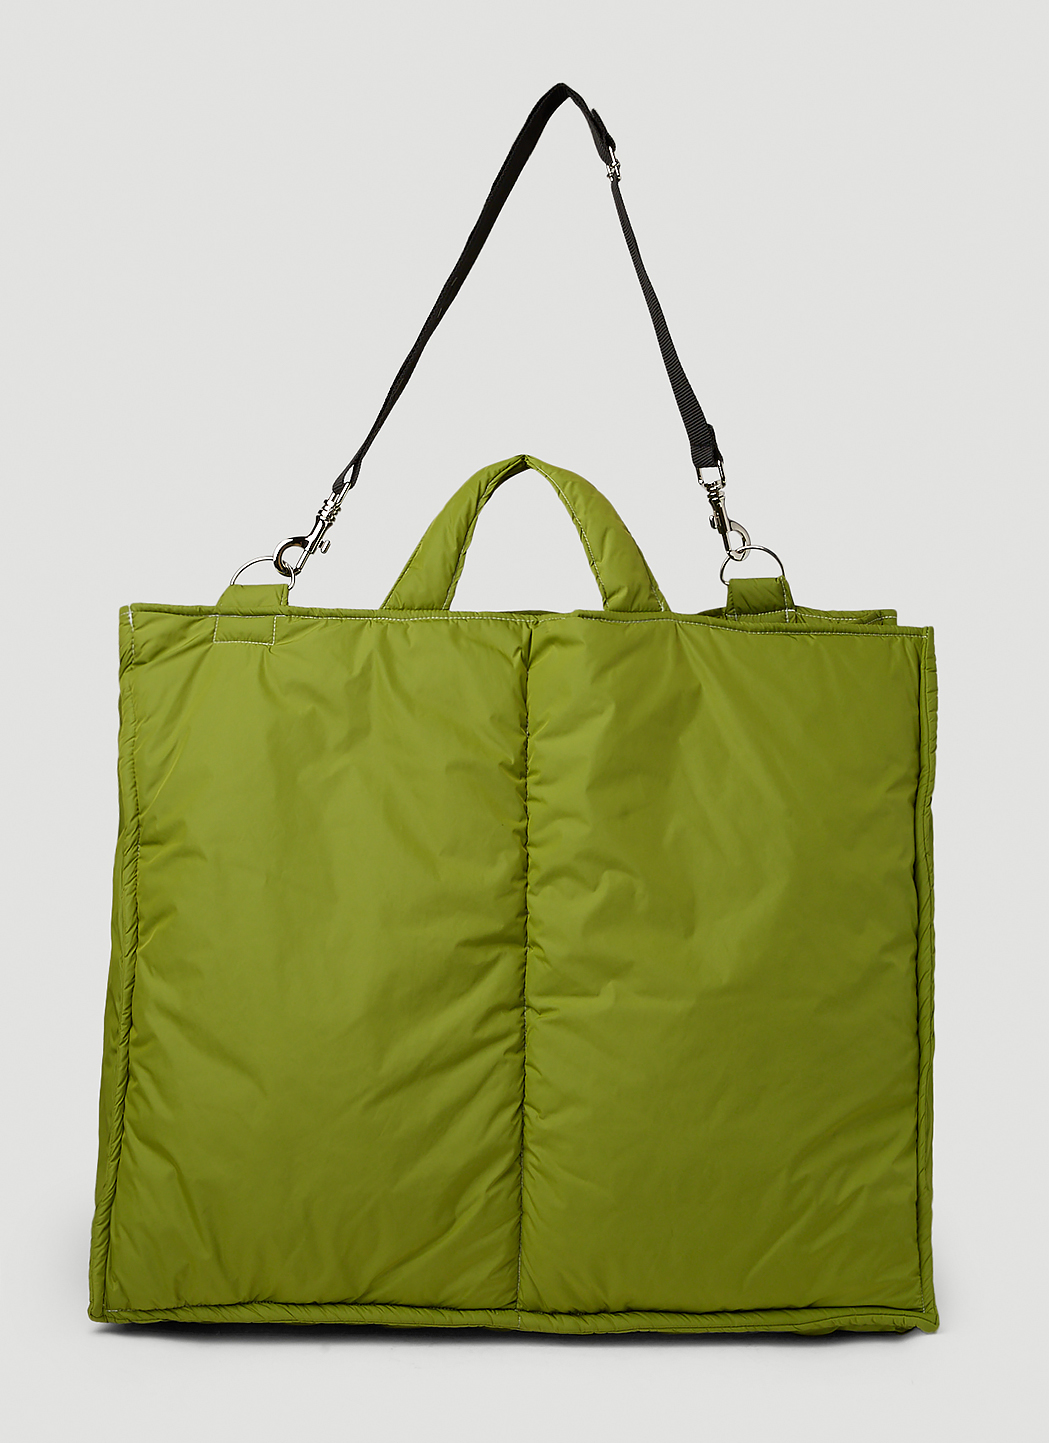 Camiel Fortgens Men's Puffed XL Tote Bag in Green | LN-CC®